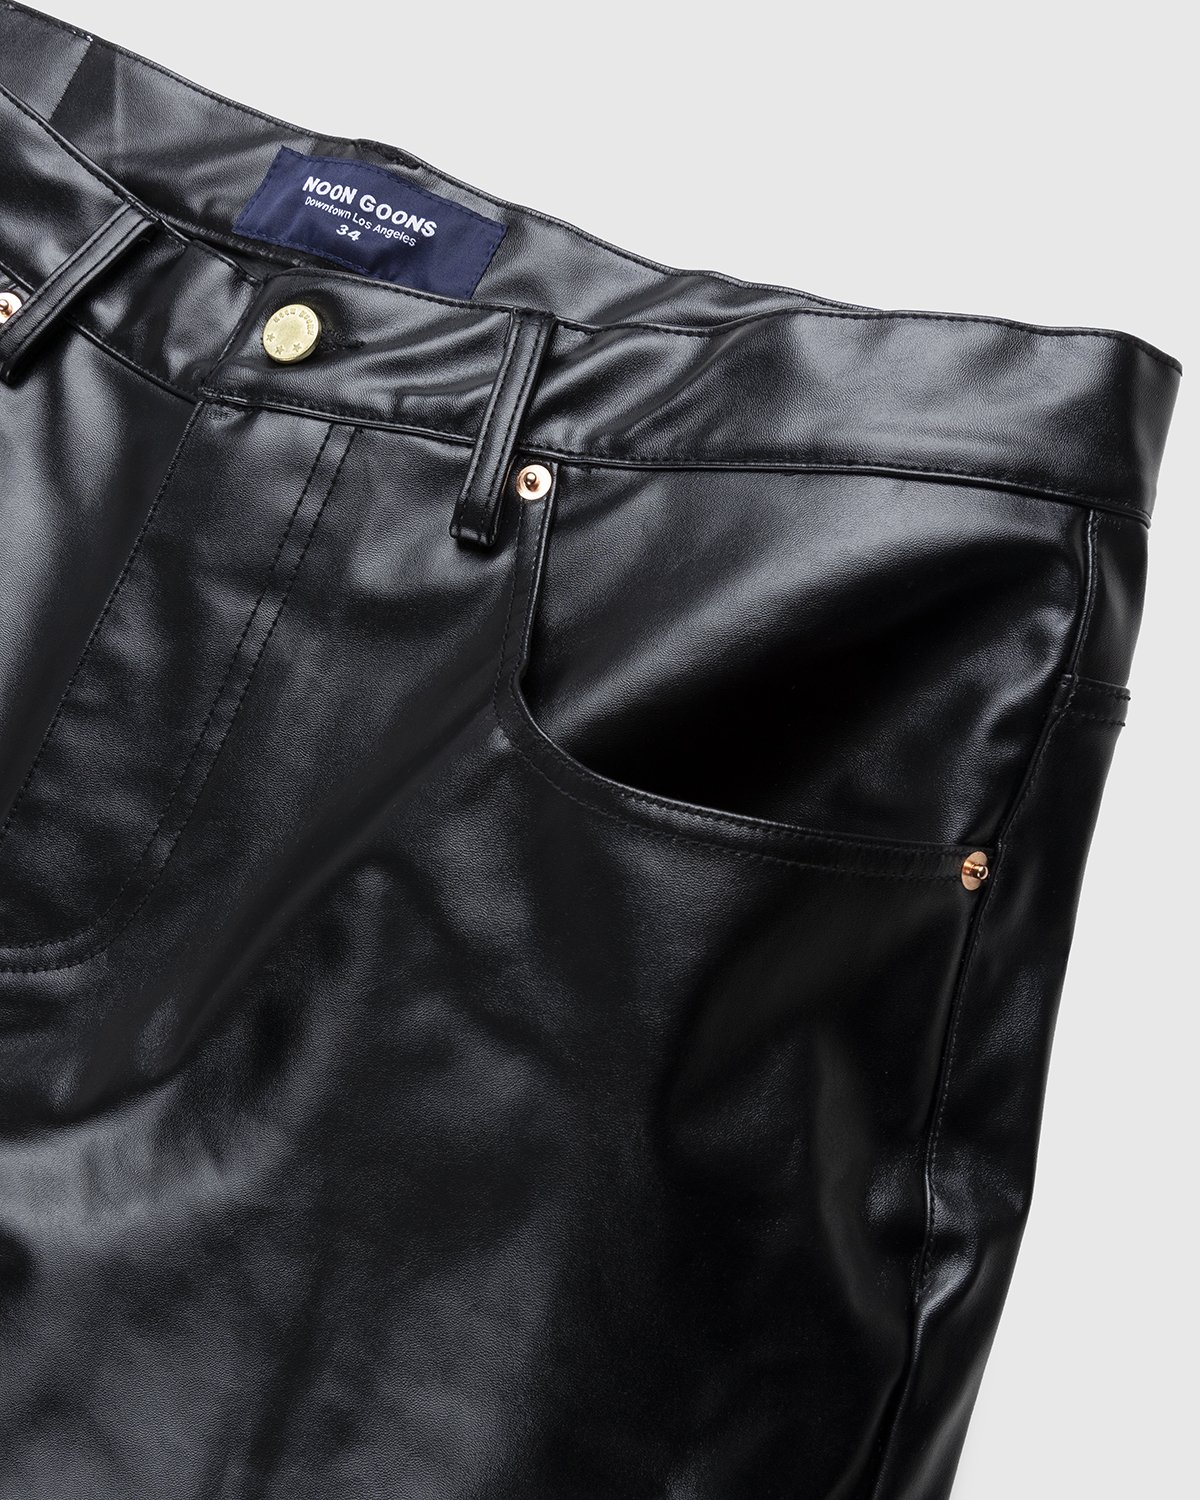 Noon Goons - Series Leather Pant Black - Clothing - Black - Image 4